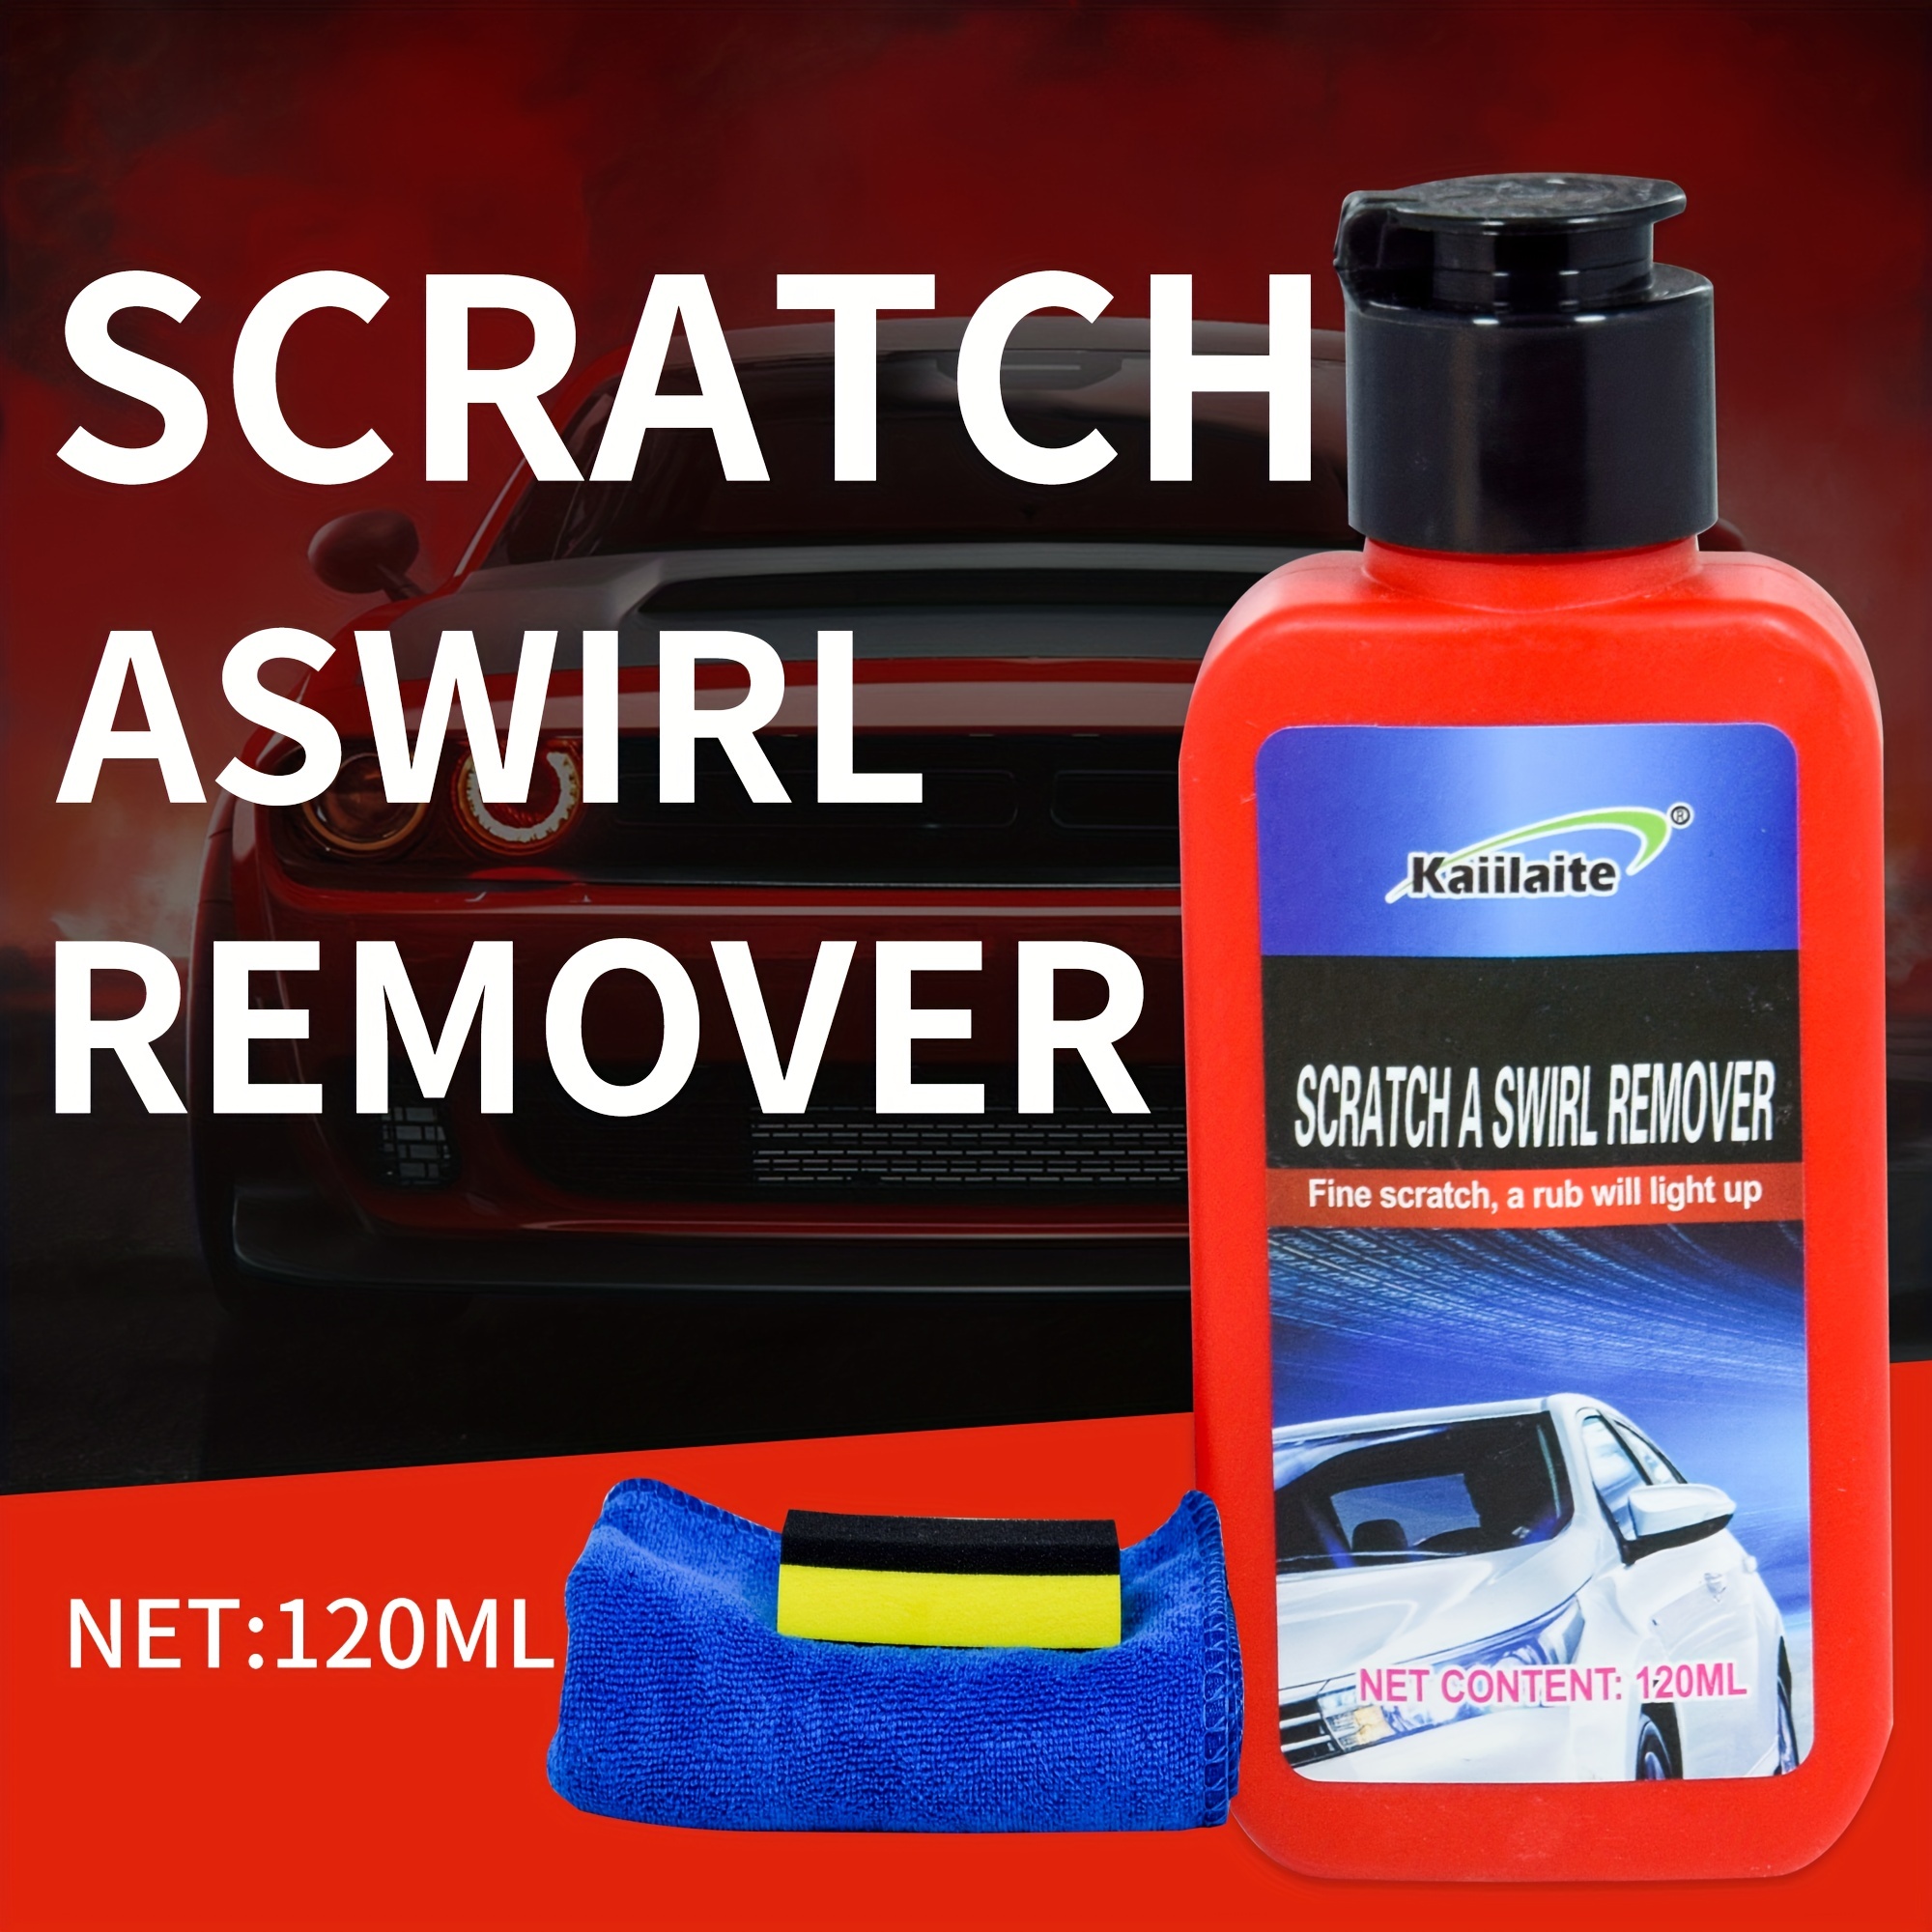 Car Scratch Remover Kit for Deep Scratches Paint Restorer Auto Repair Wax  Set US